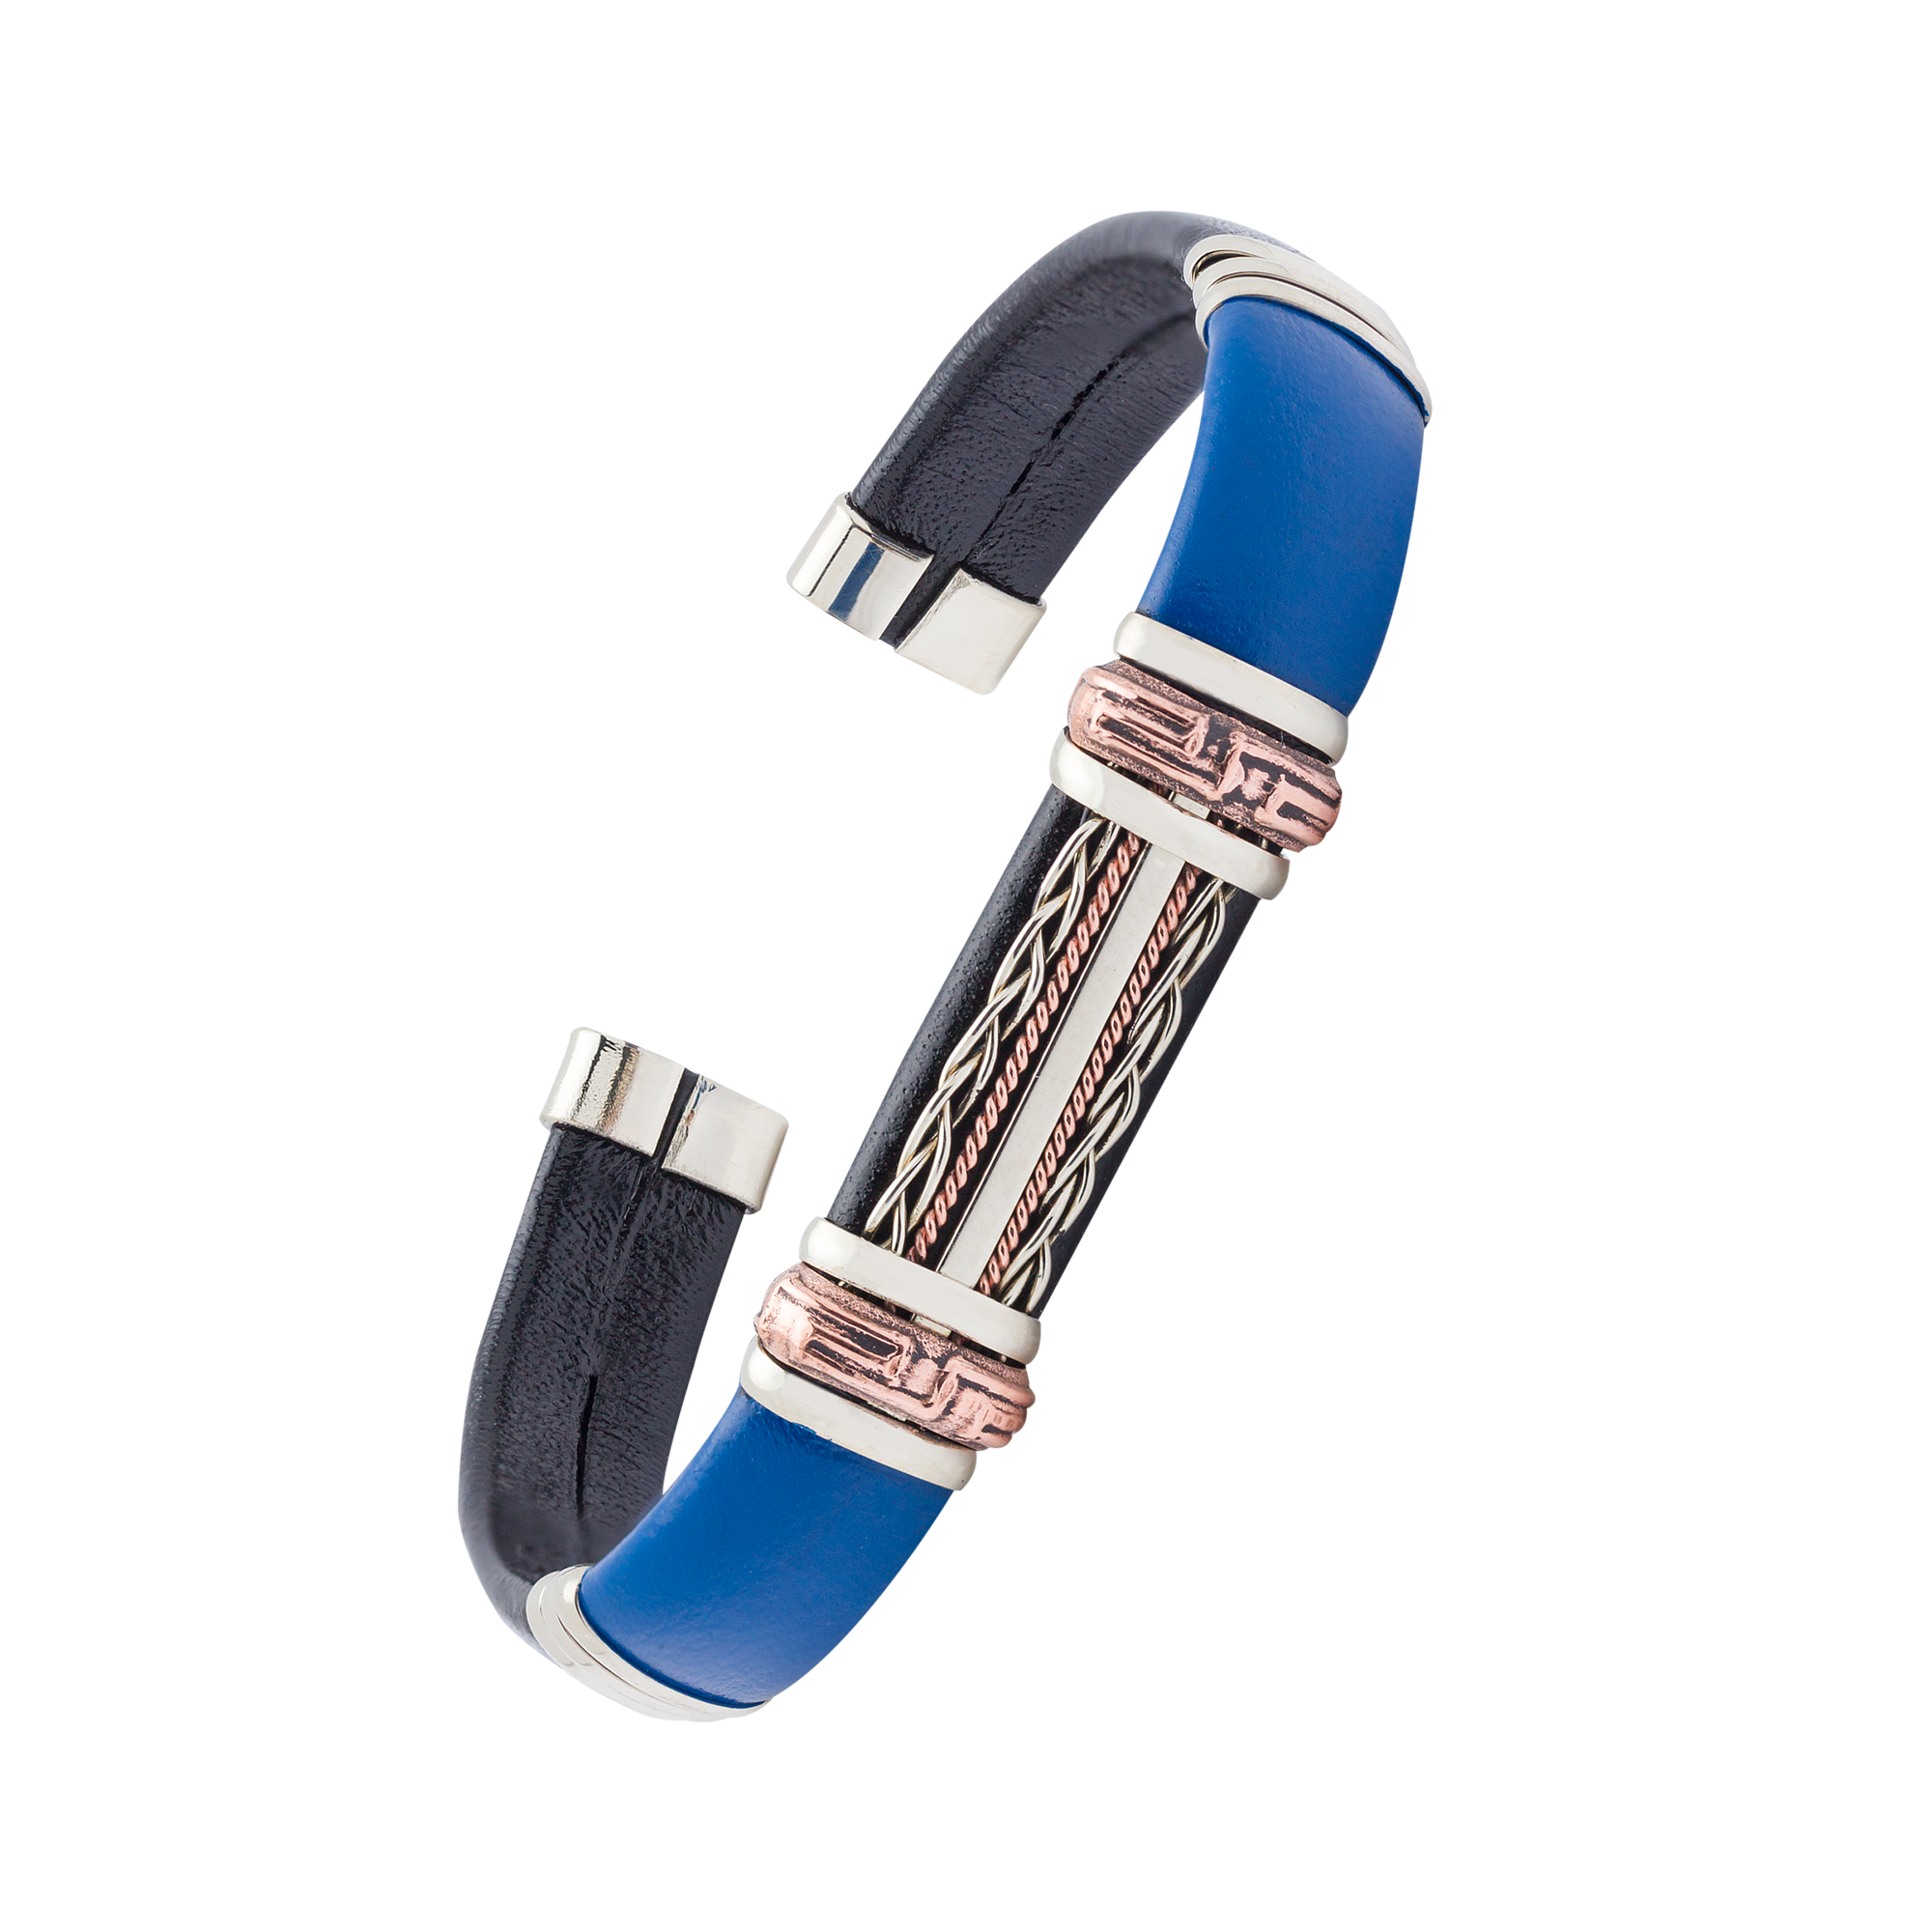 BR.ULB.1311 - Leather Bracelet, Blue